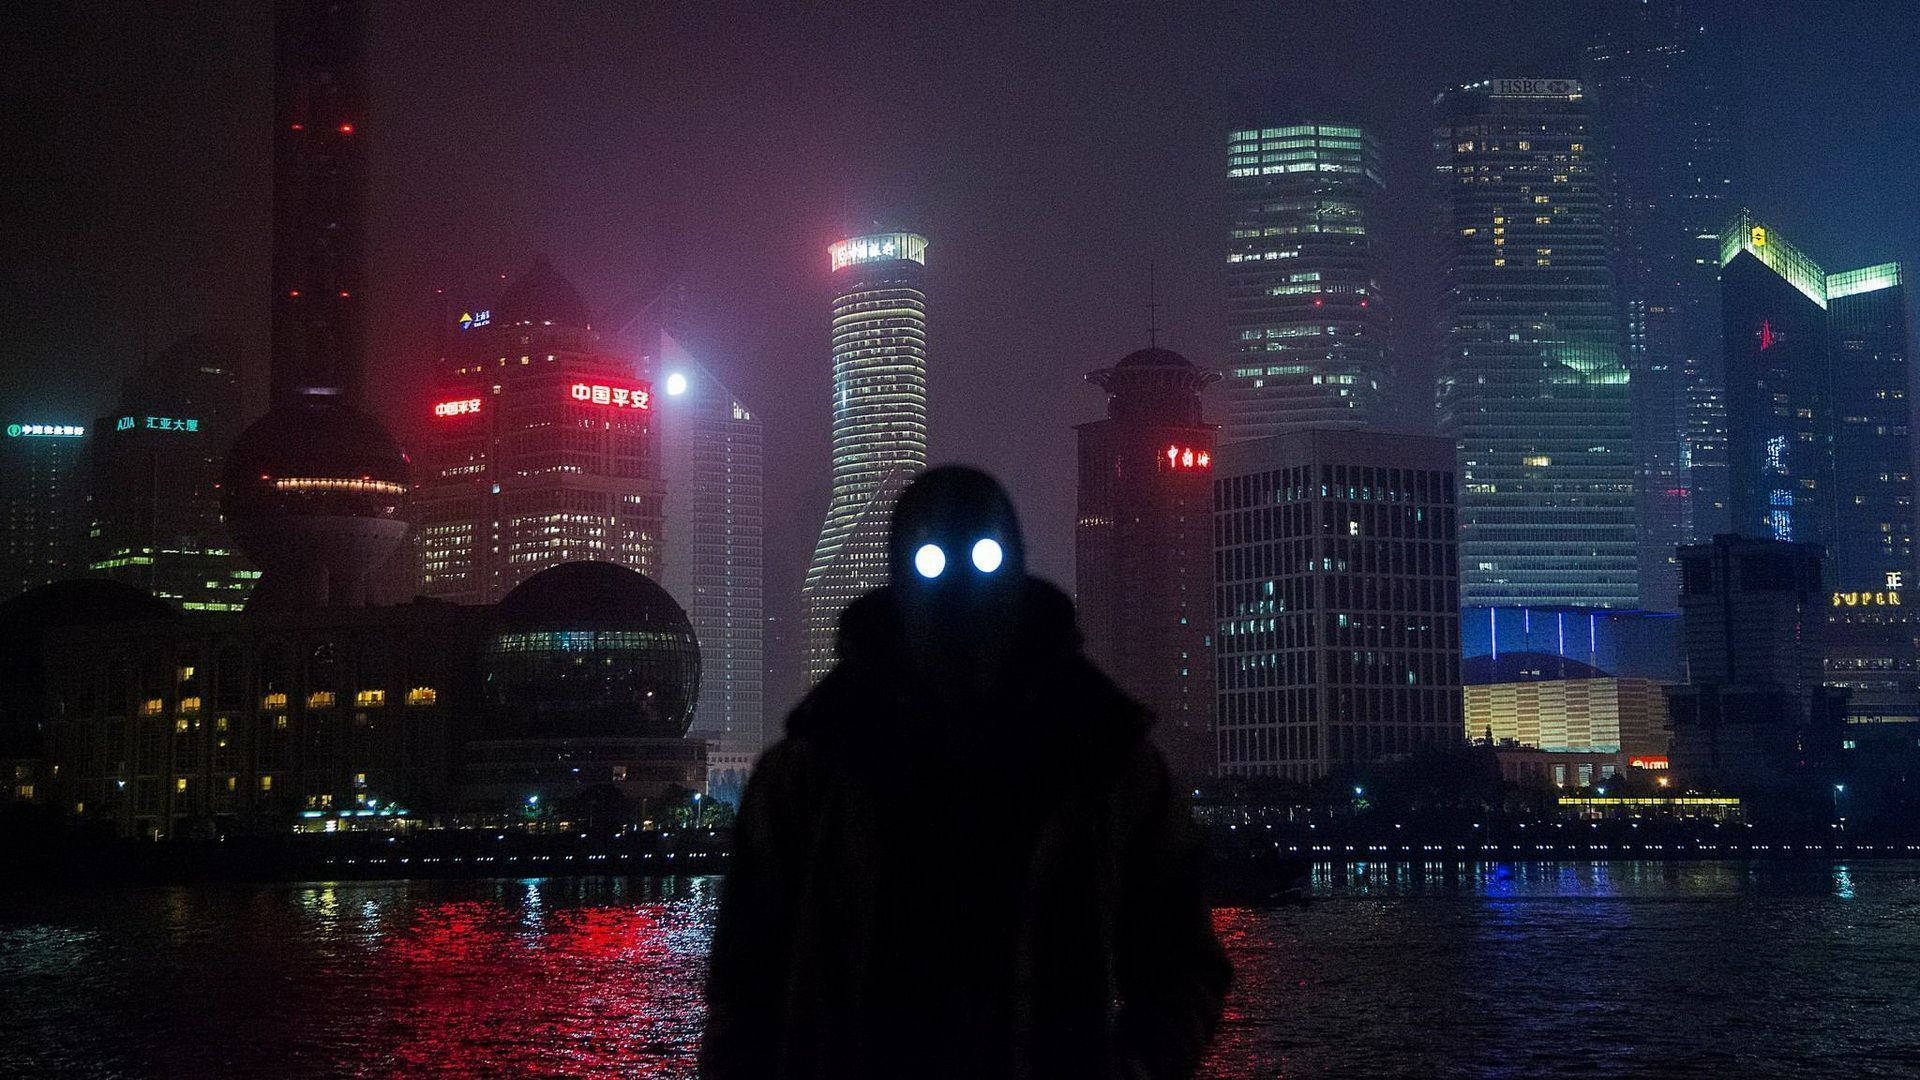 Cyberpunk Futuristic View of Shanghai at Night Wallpaper